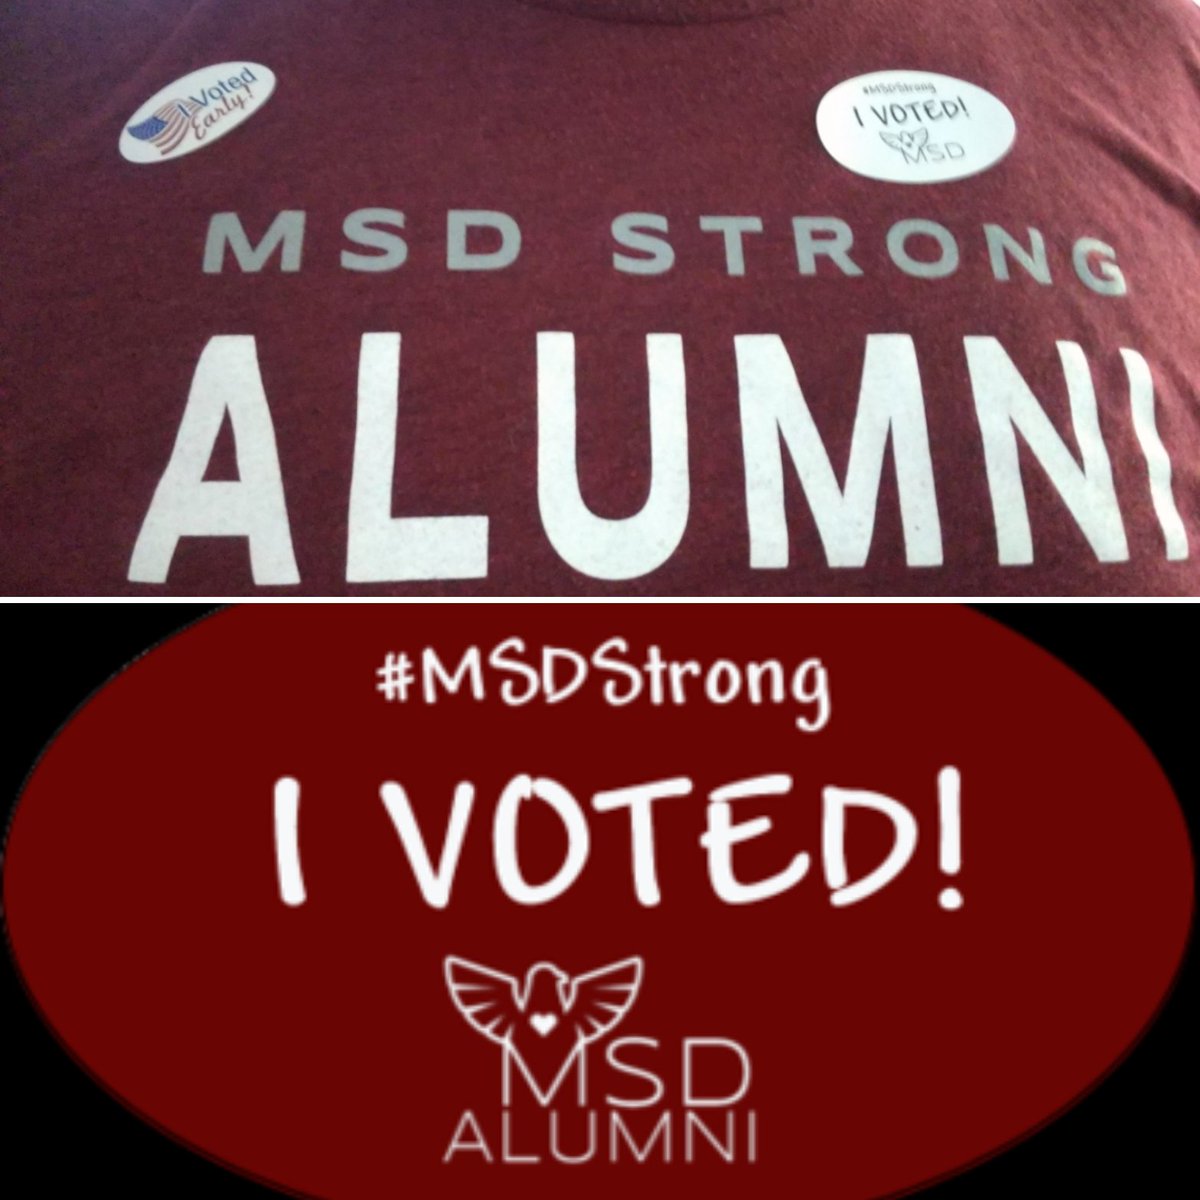 @msdclassof2019 Alumni voted!!!